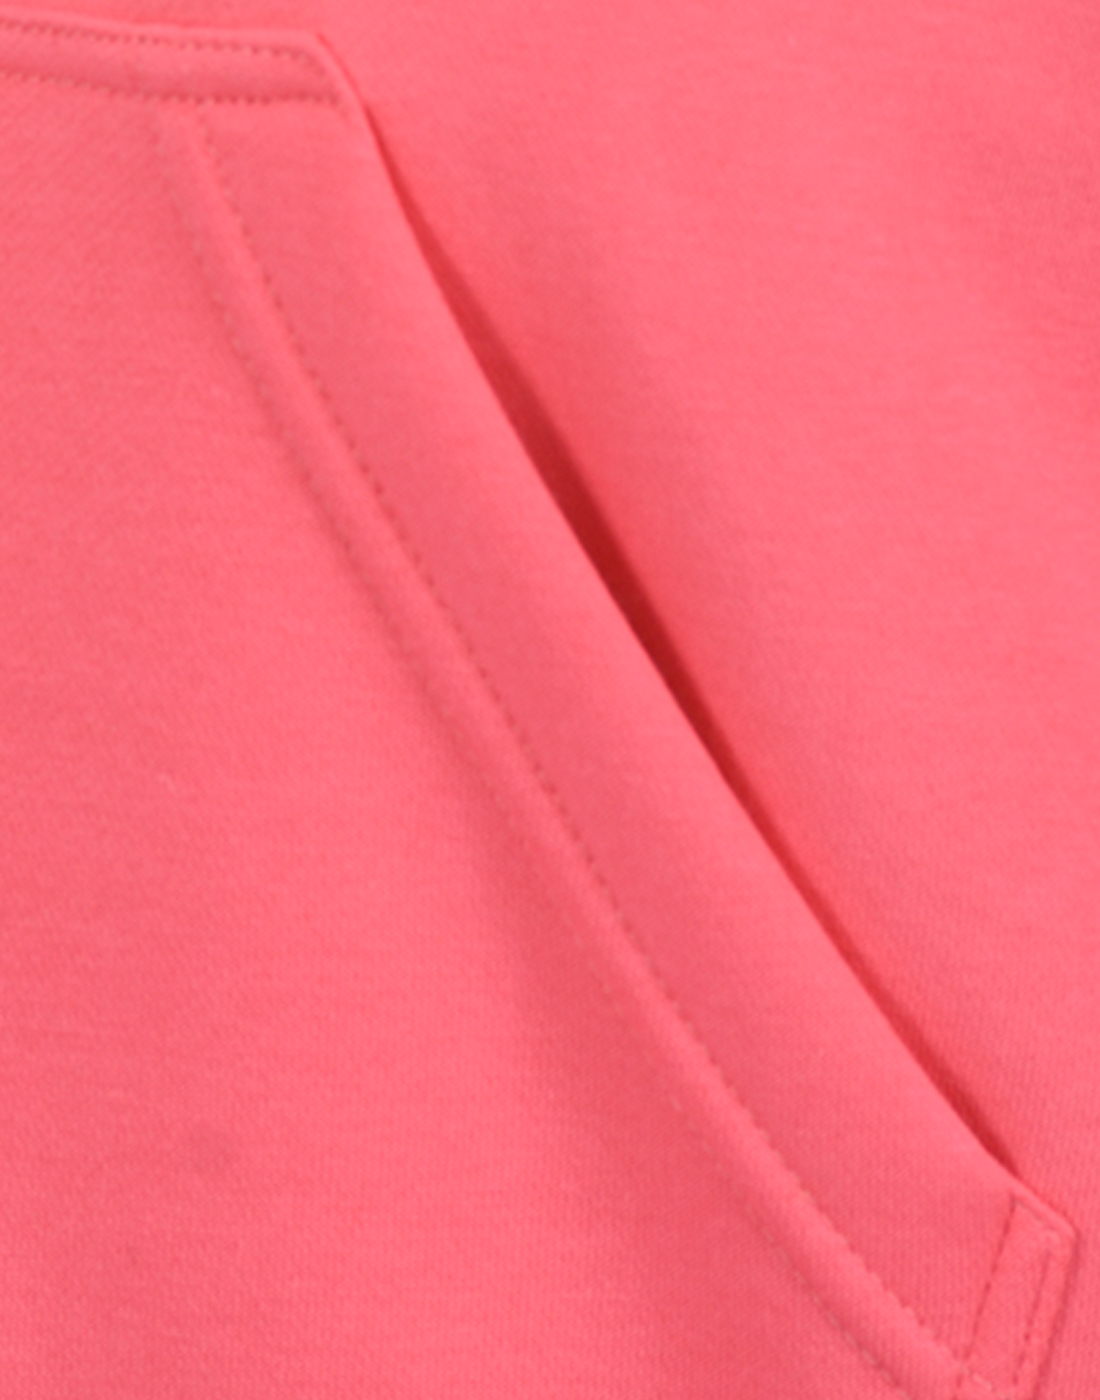 ONEWAY Women Striped Pink Sweatshirt